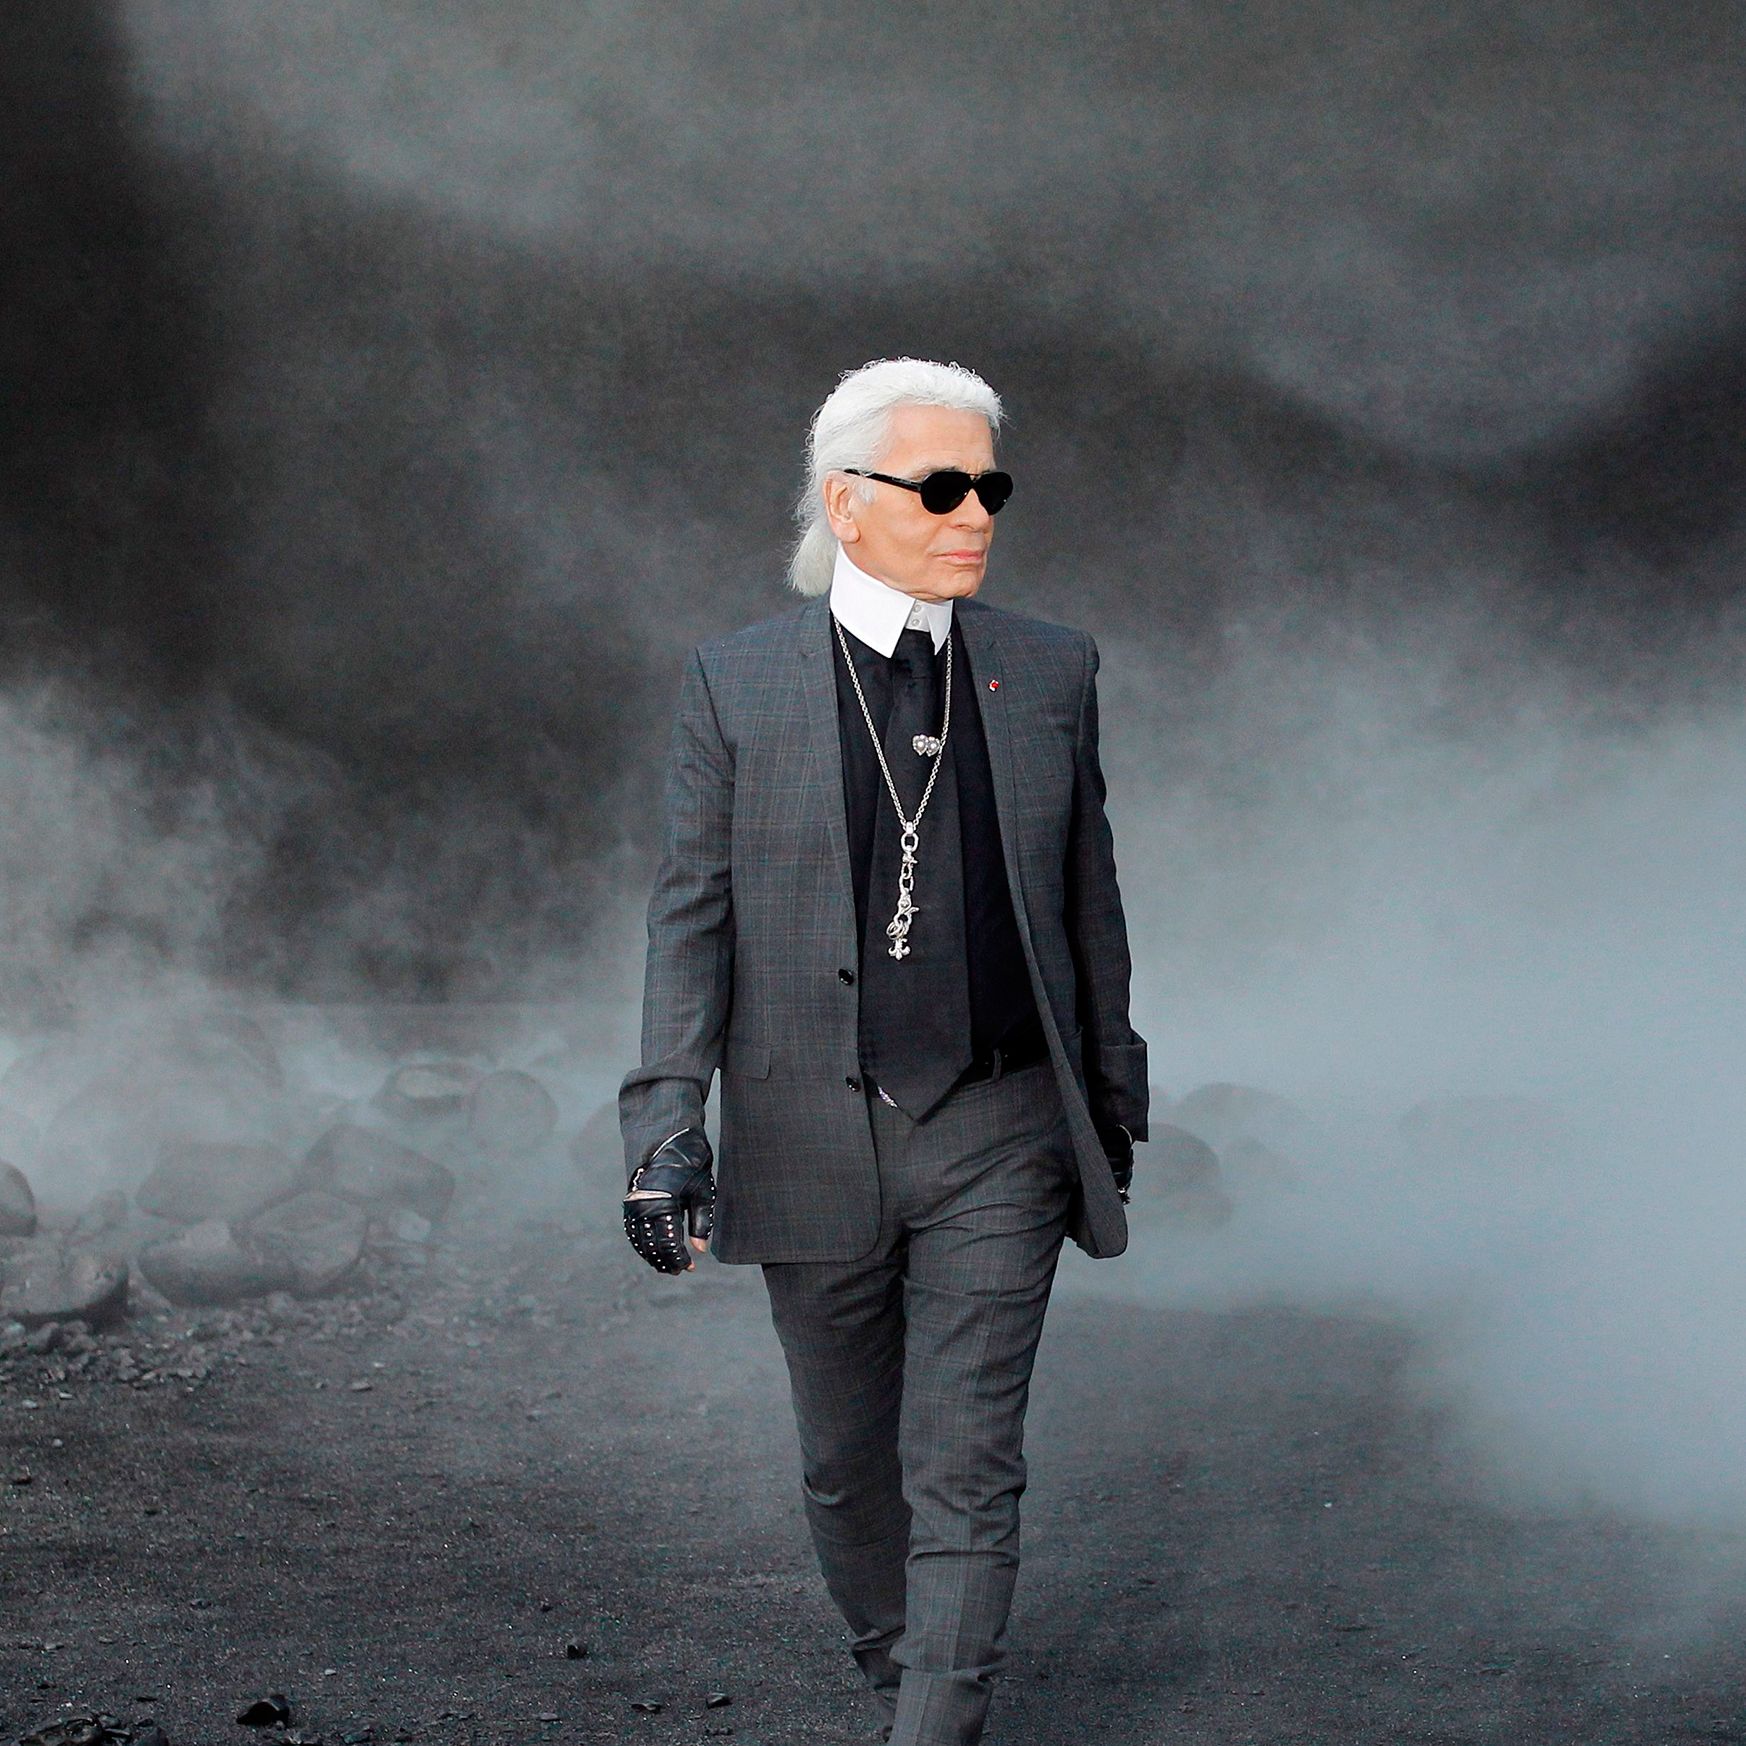 Iconic fashion designer Karl Lagerfeld dies at age 85 in Paris